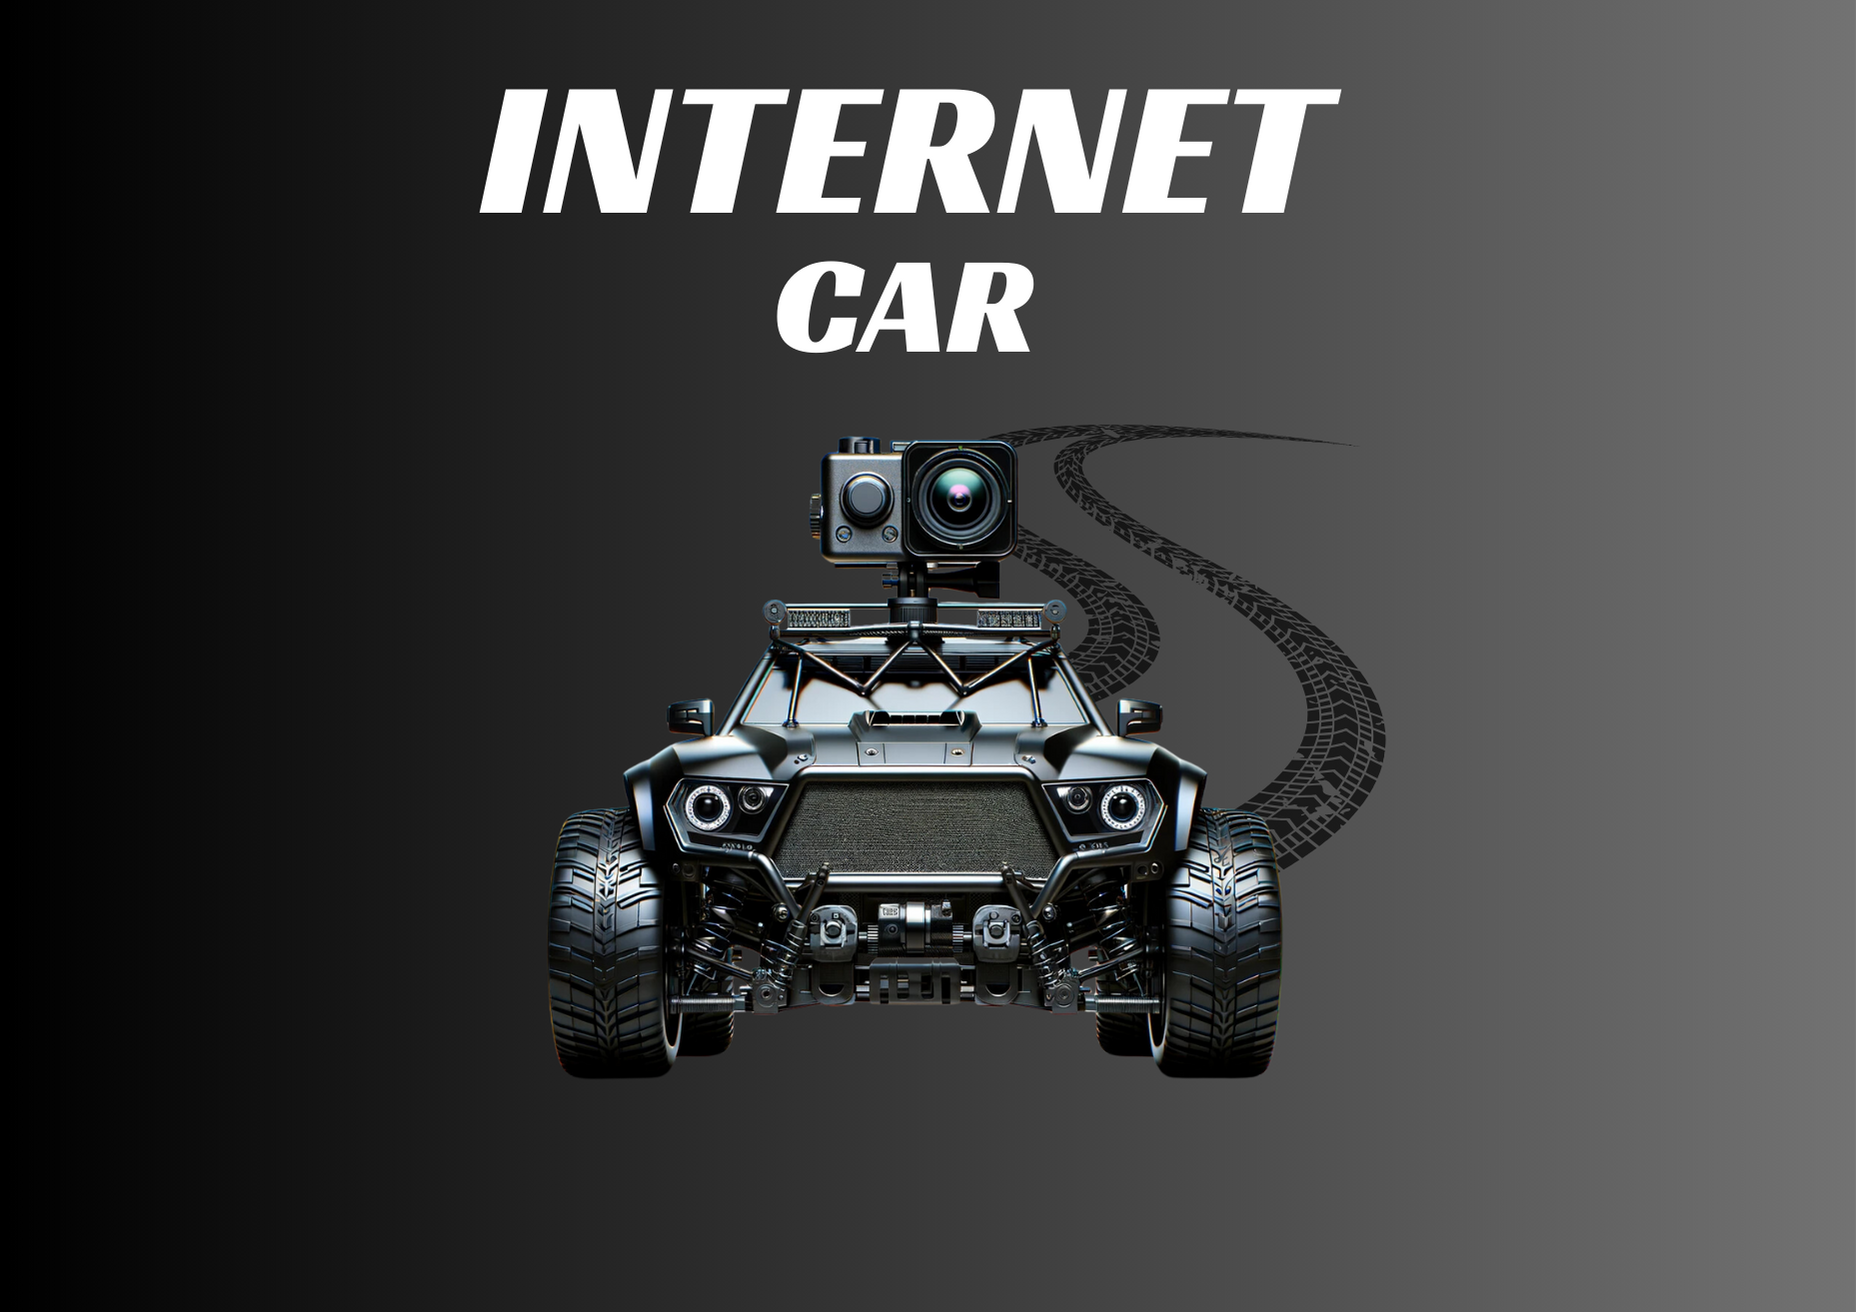 Internet car